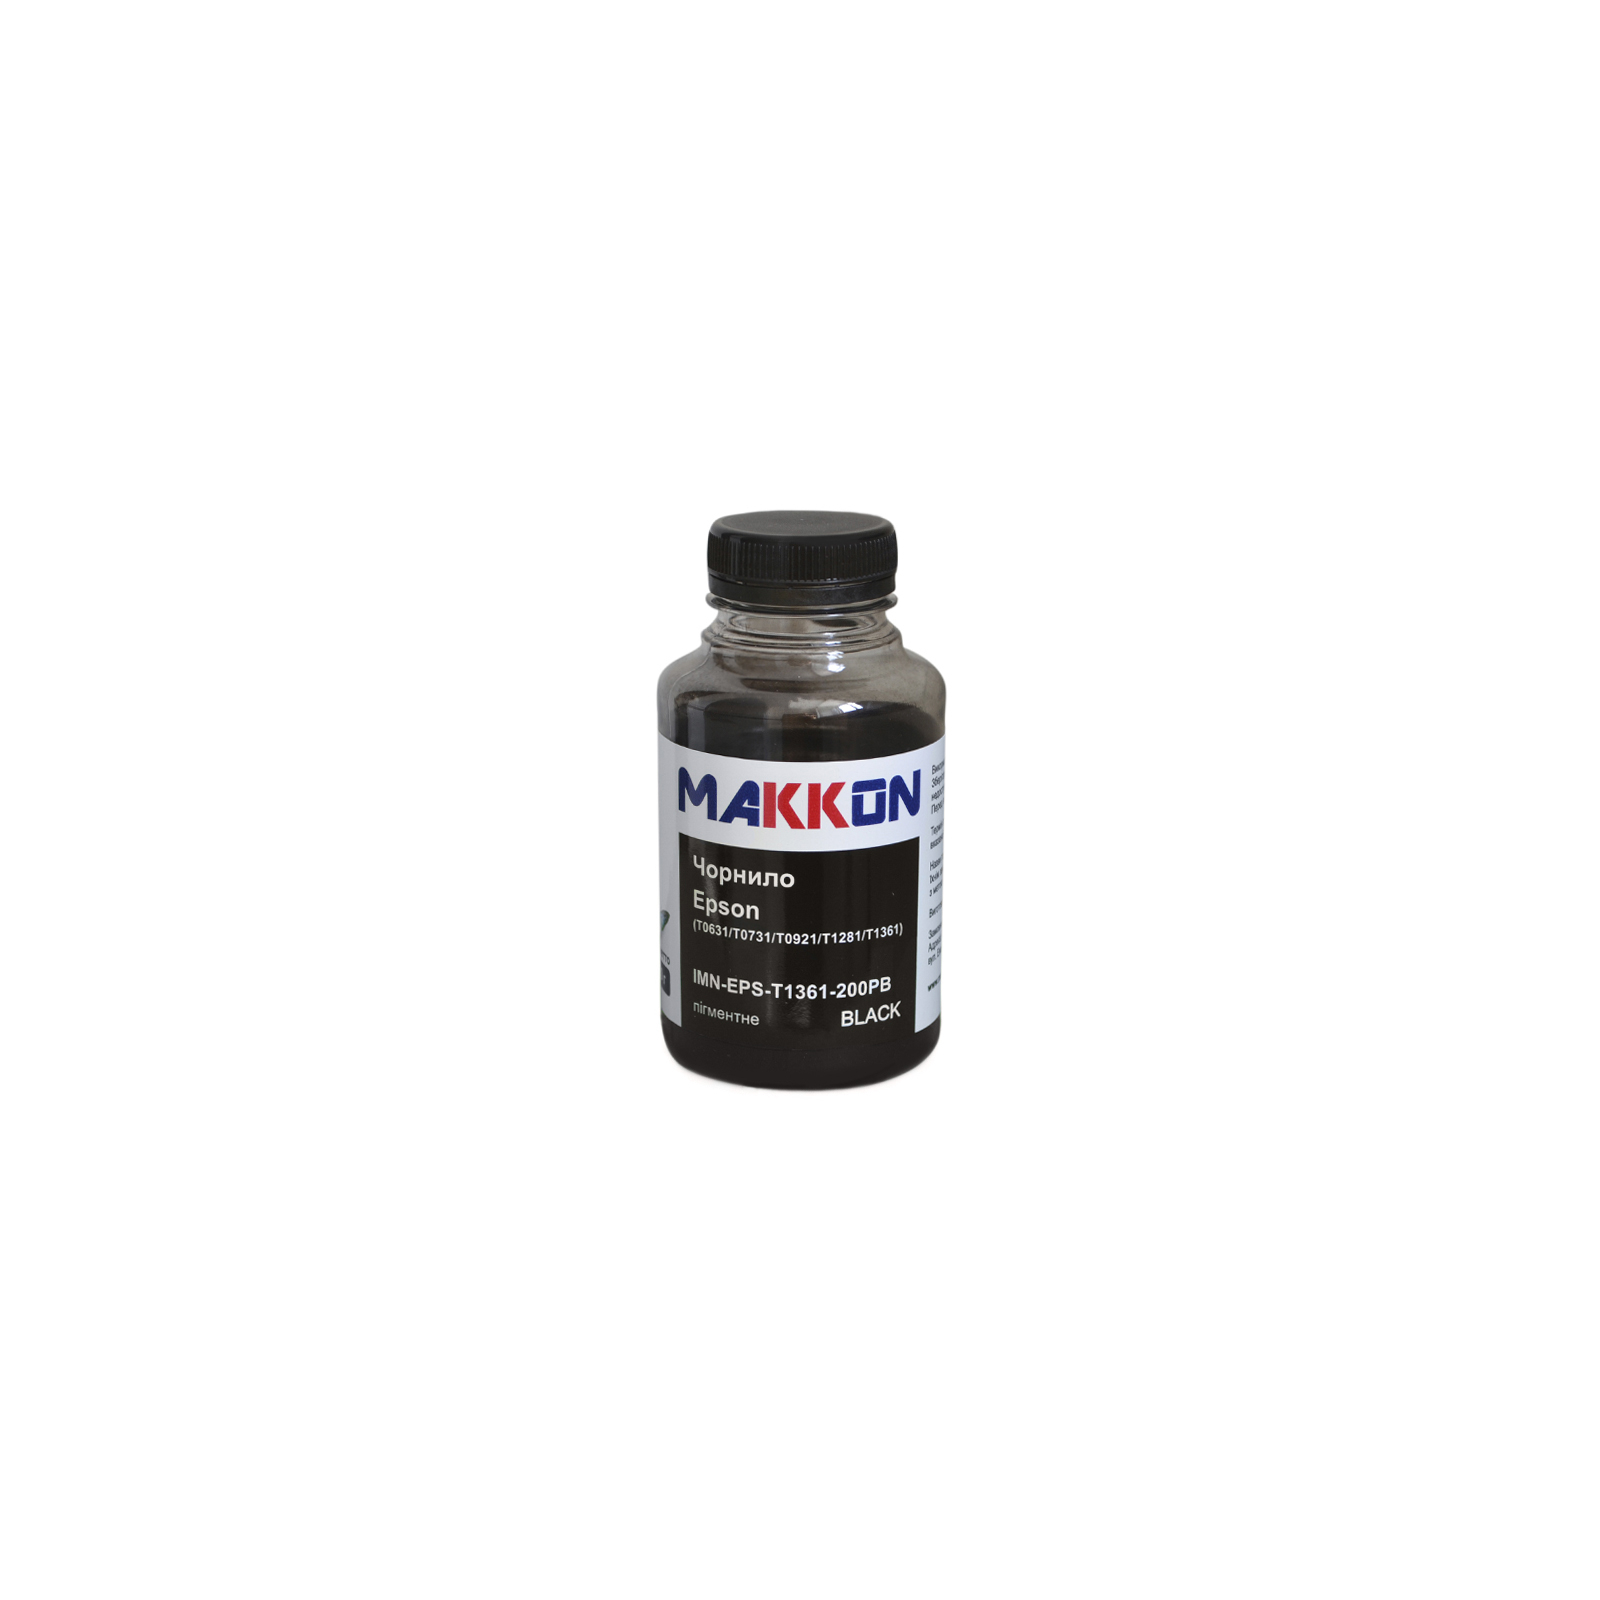 Чернила Makkon Epson T0631/T0731/T0921/T1281/T1361 200г pigmented black (IMN-EPS-T1361-200PB)